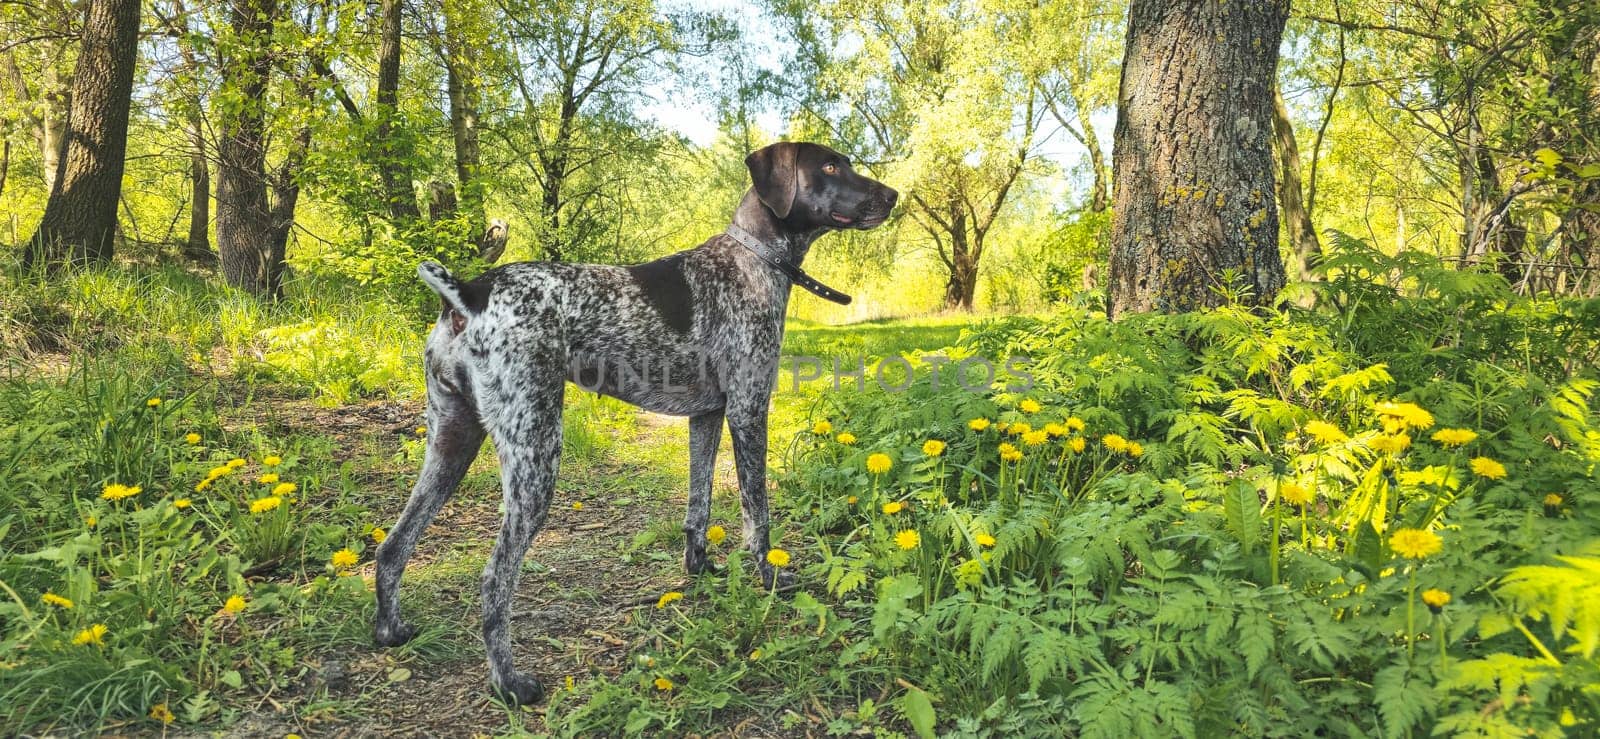 hunting dog among spring greenery by drakuliren